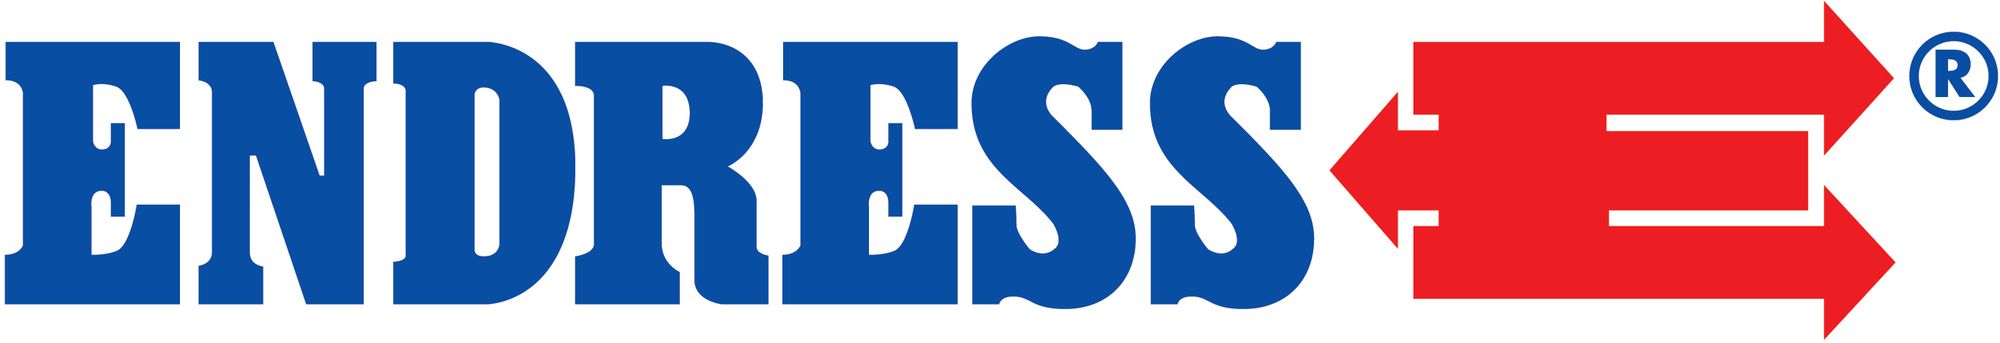 Логотип бренда Endress